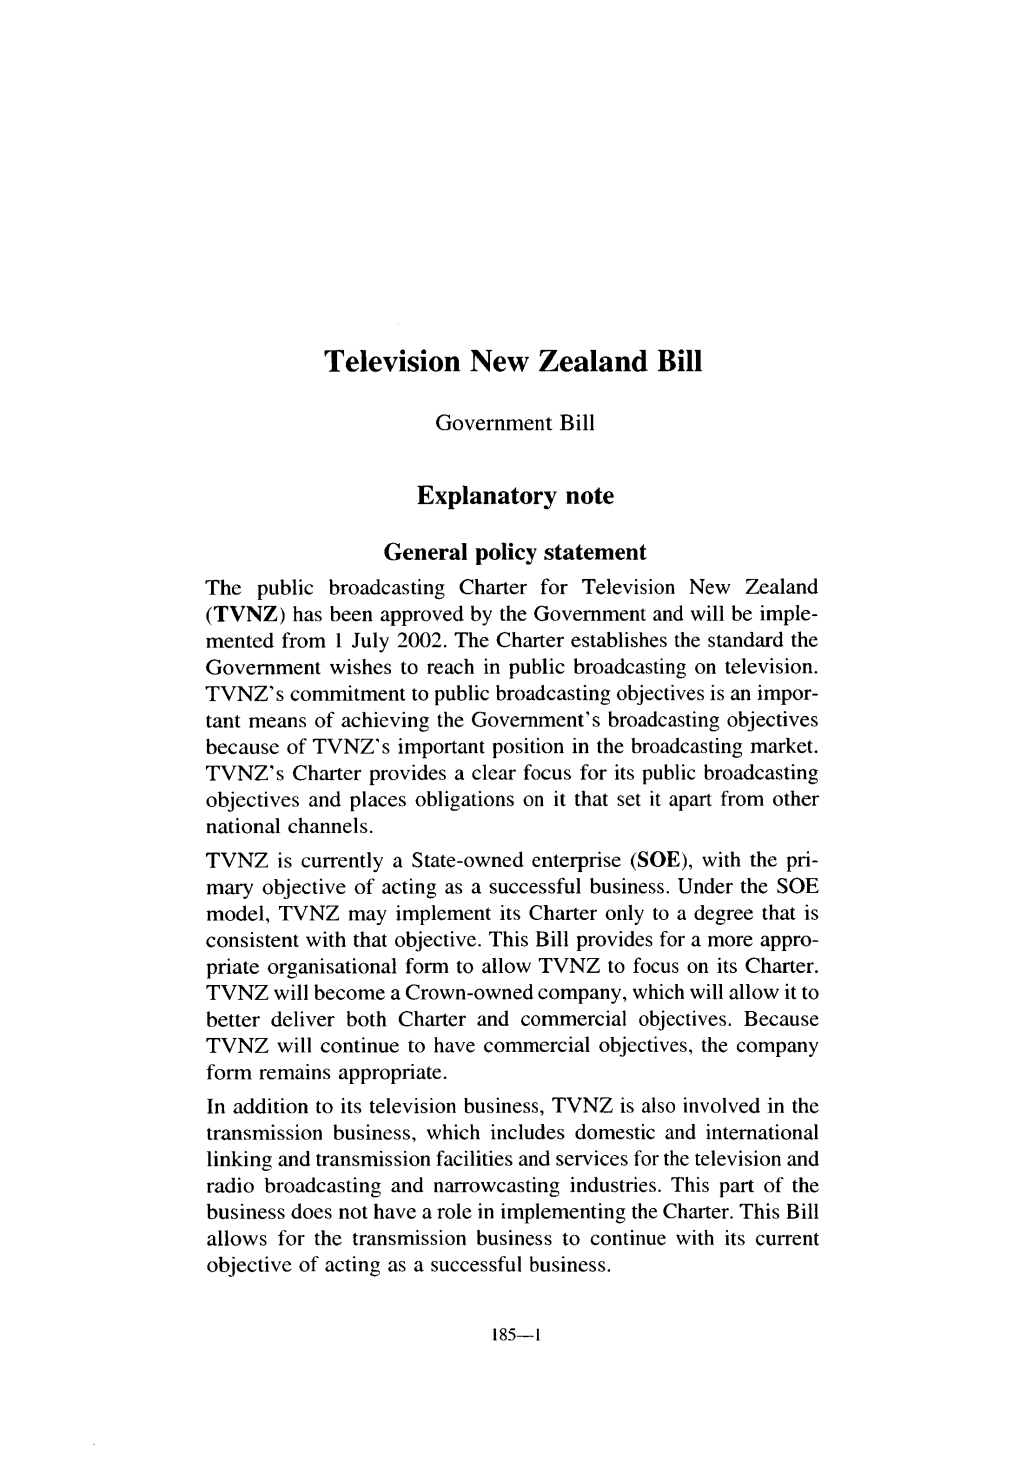 Television New Zealand Bill-185-1